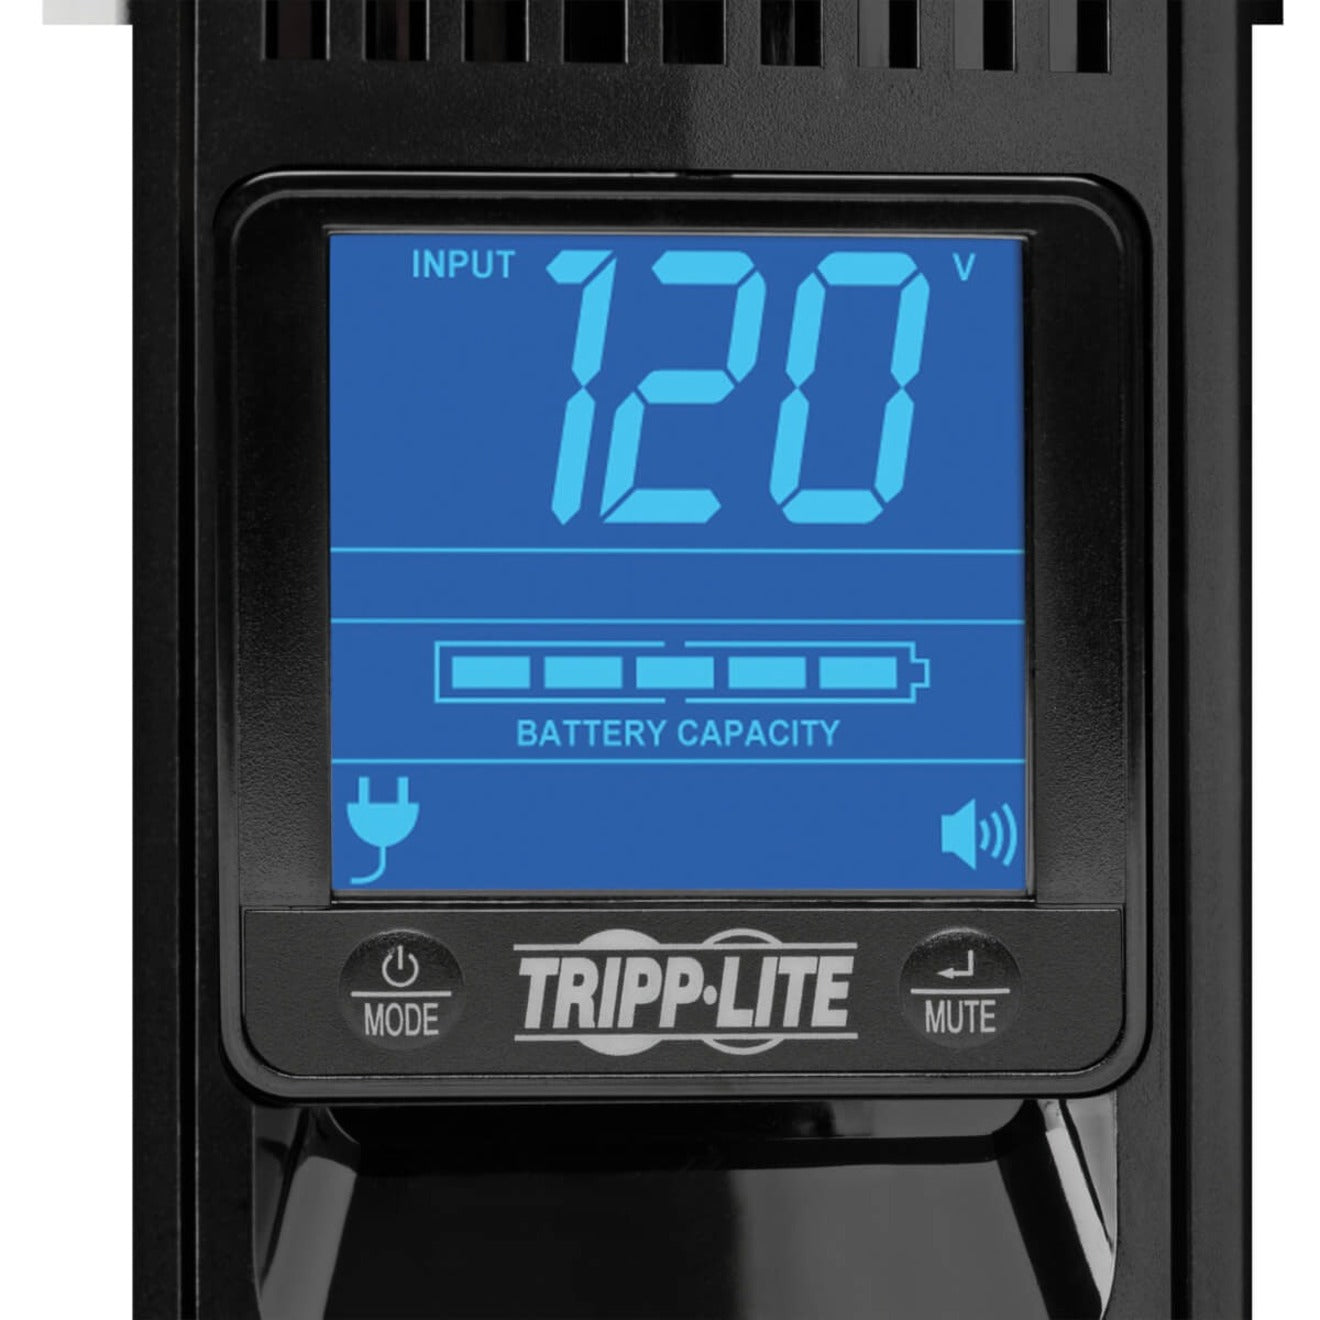 Tripp Lite SMART1200LCD SmartPro 1200 VA Rack-mountable Tower Digital UPS, 3 Year Warranty, USB and Serial Port, 120 V AC Output